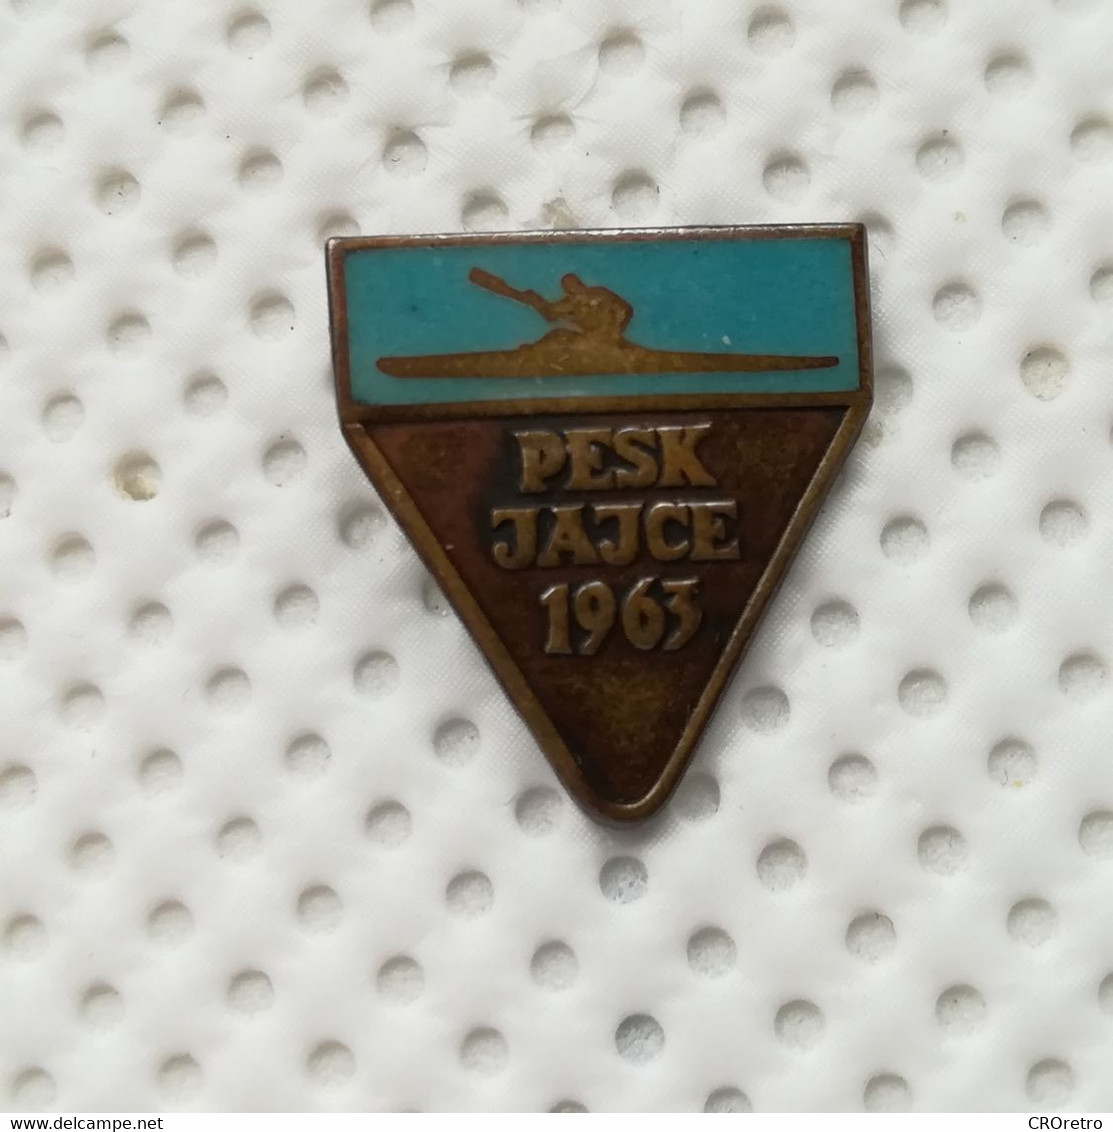 Rowing, Kayak, Canoe - PESK JAJCE 1963 YUGOSLAVIA, World Championship, Enamel Badge, Pin - Rudersport